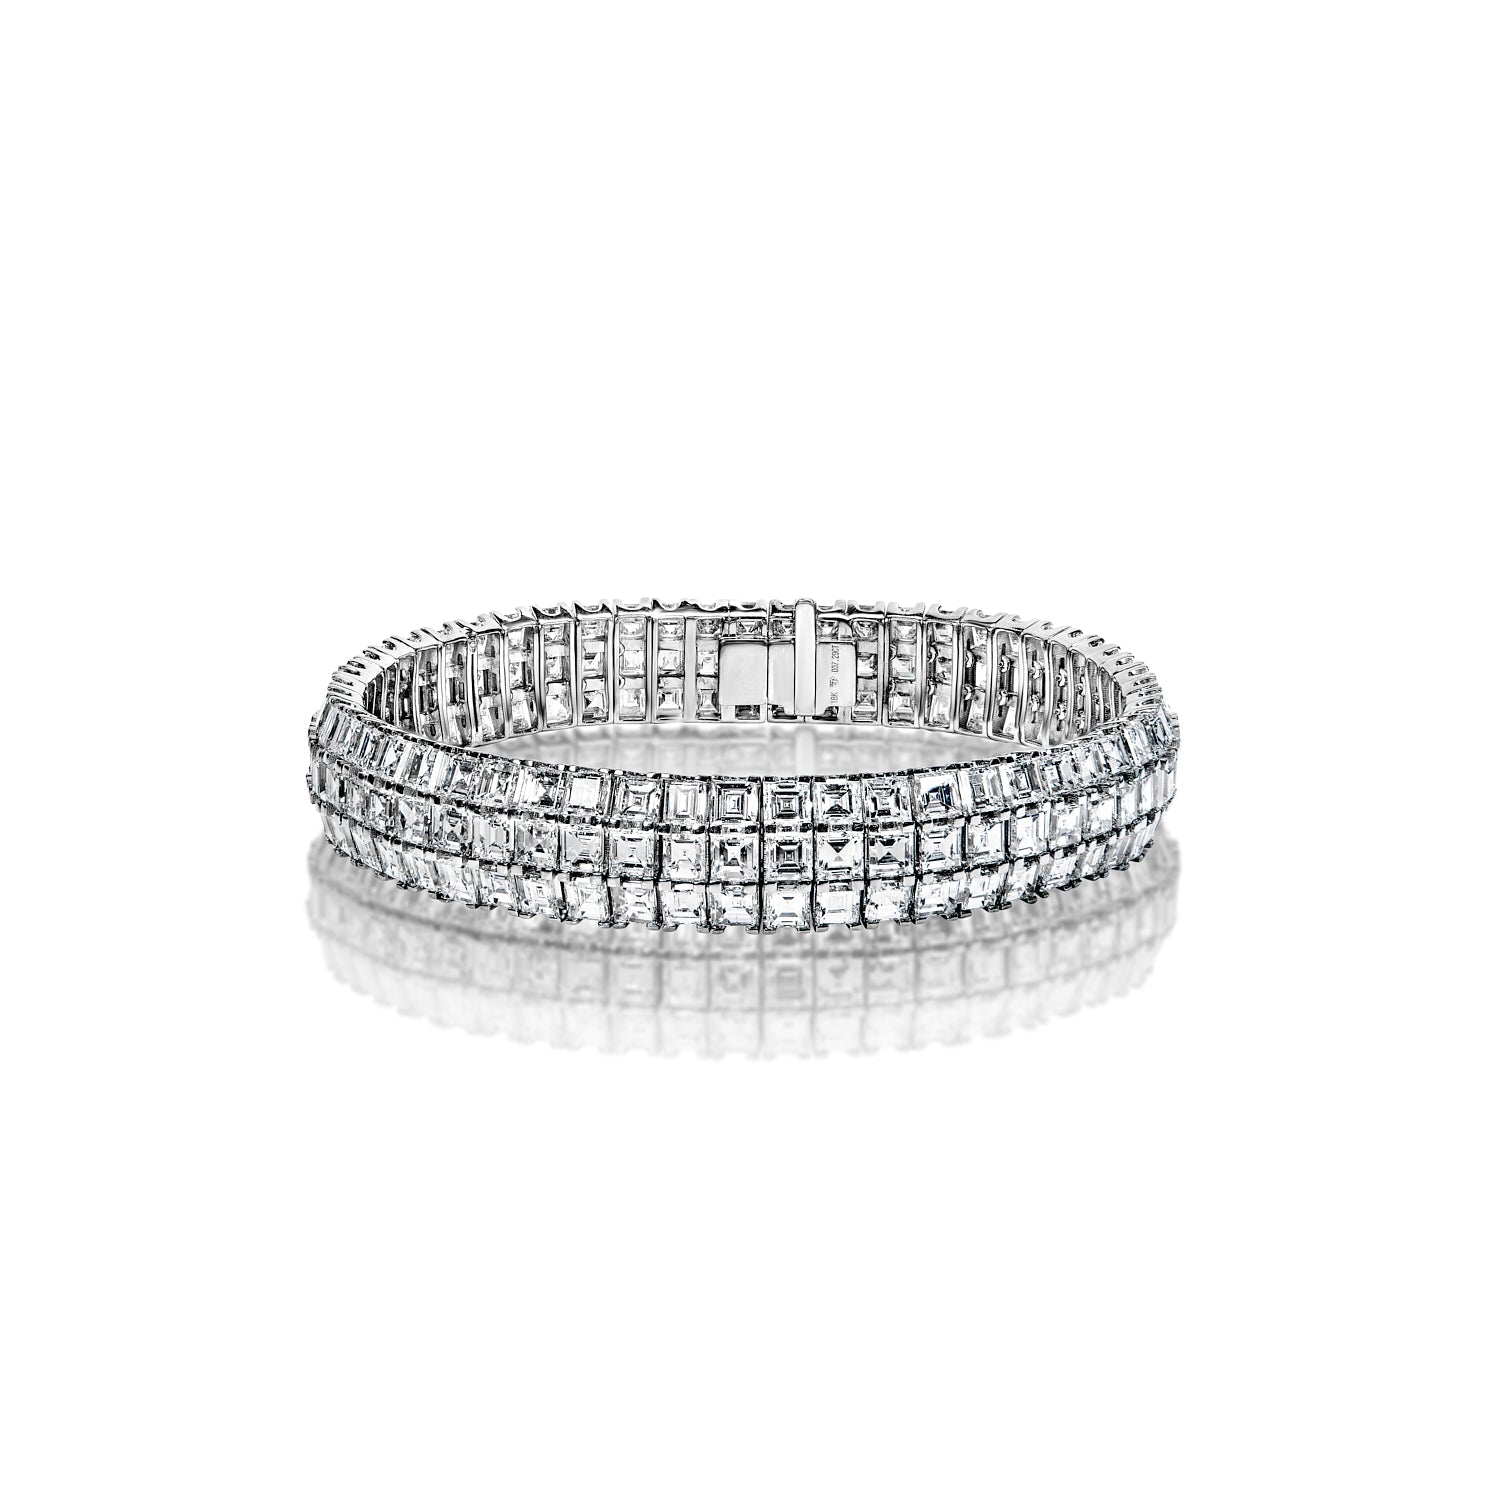 Rounded Square Diamond Pave Bangle Bracelet | Diamond bracelet design,  Diamond bangles bracelet, Diamond bangle